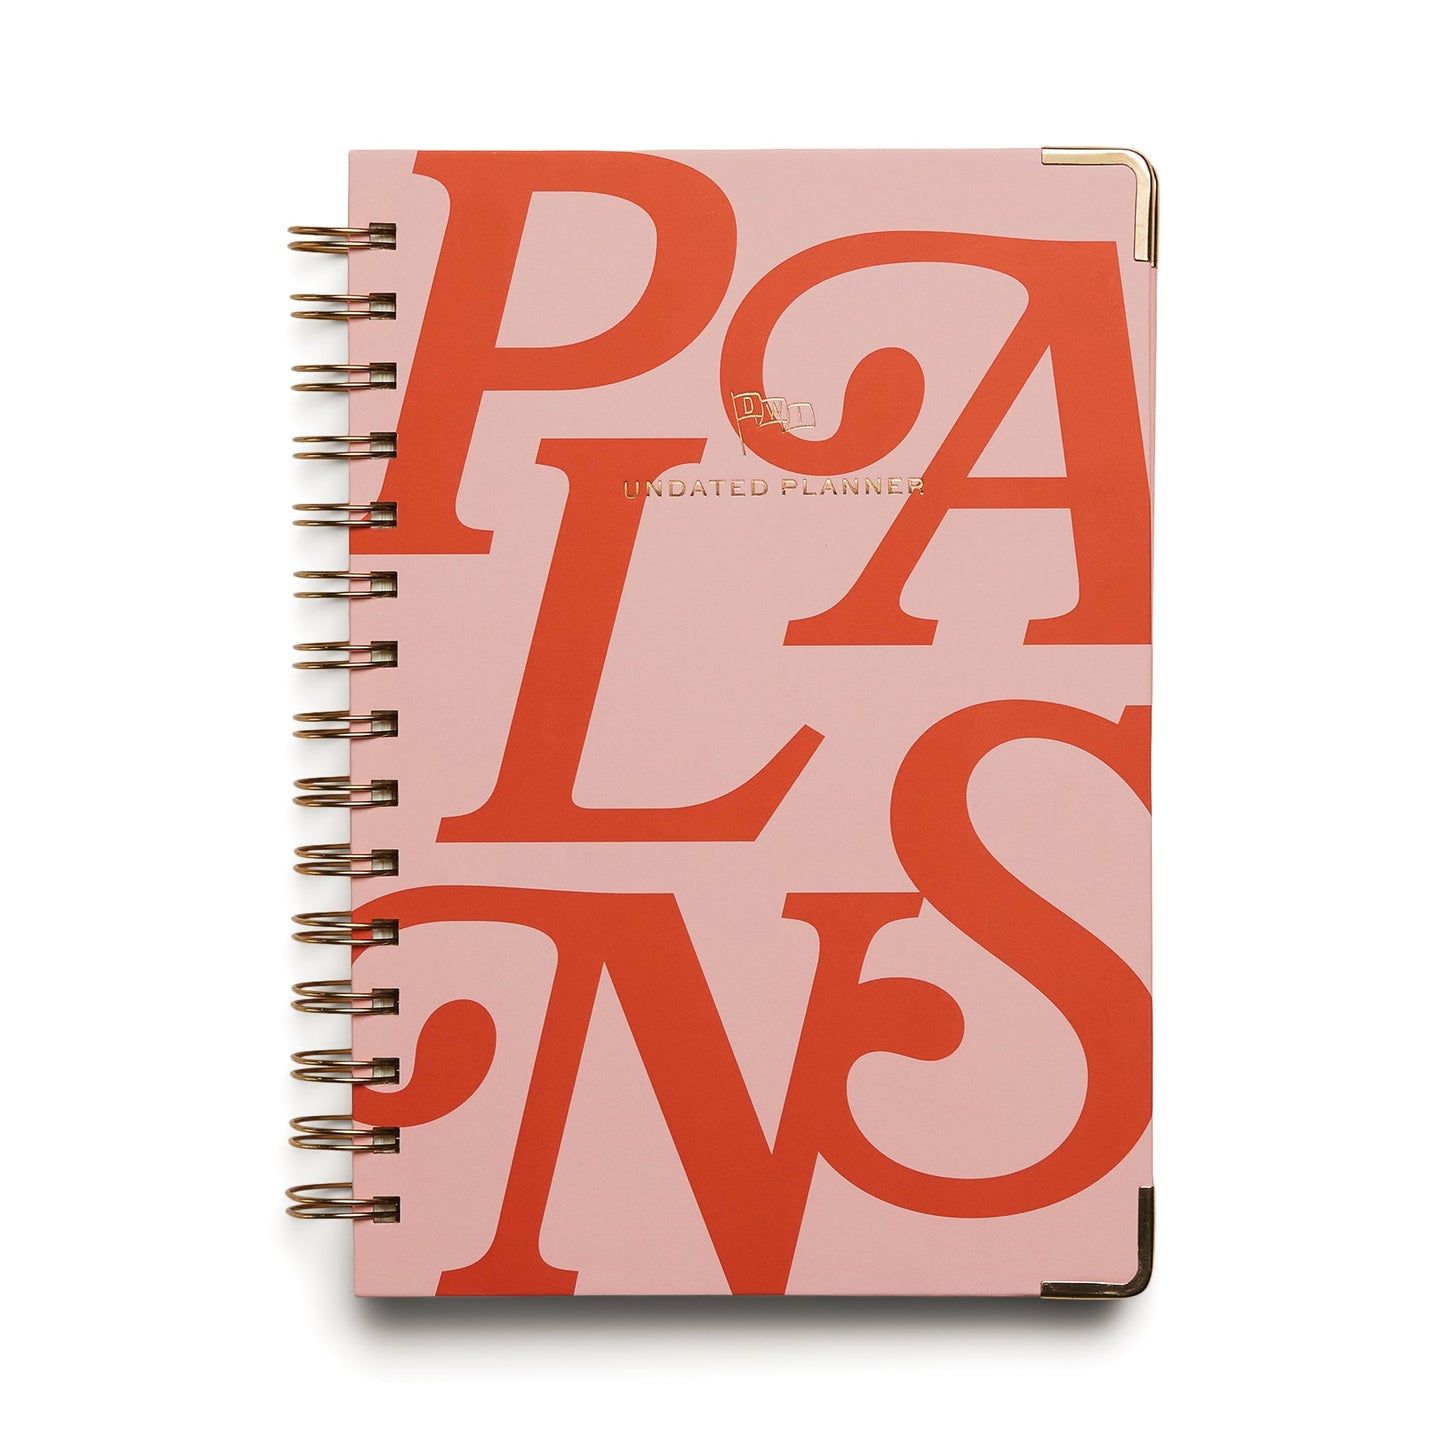 Undated Perpetual Planner - Plans